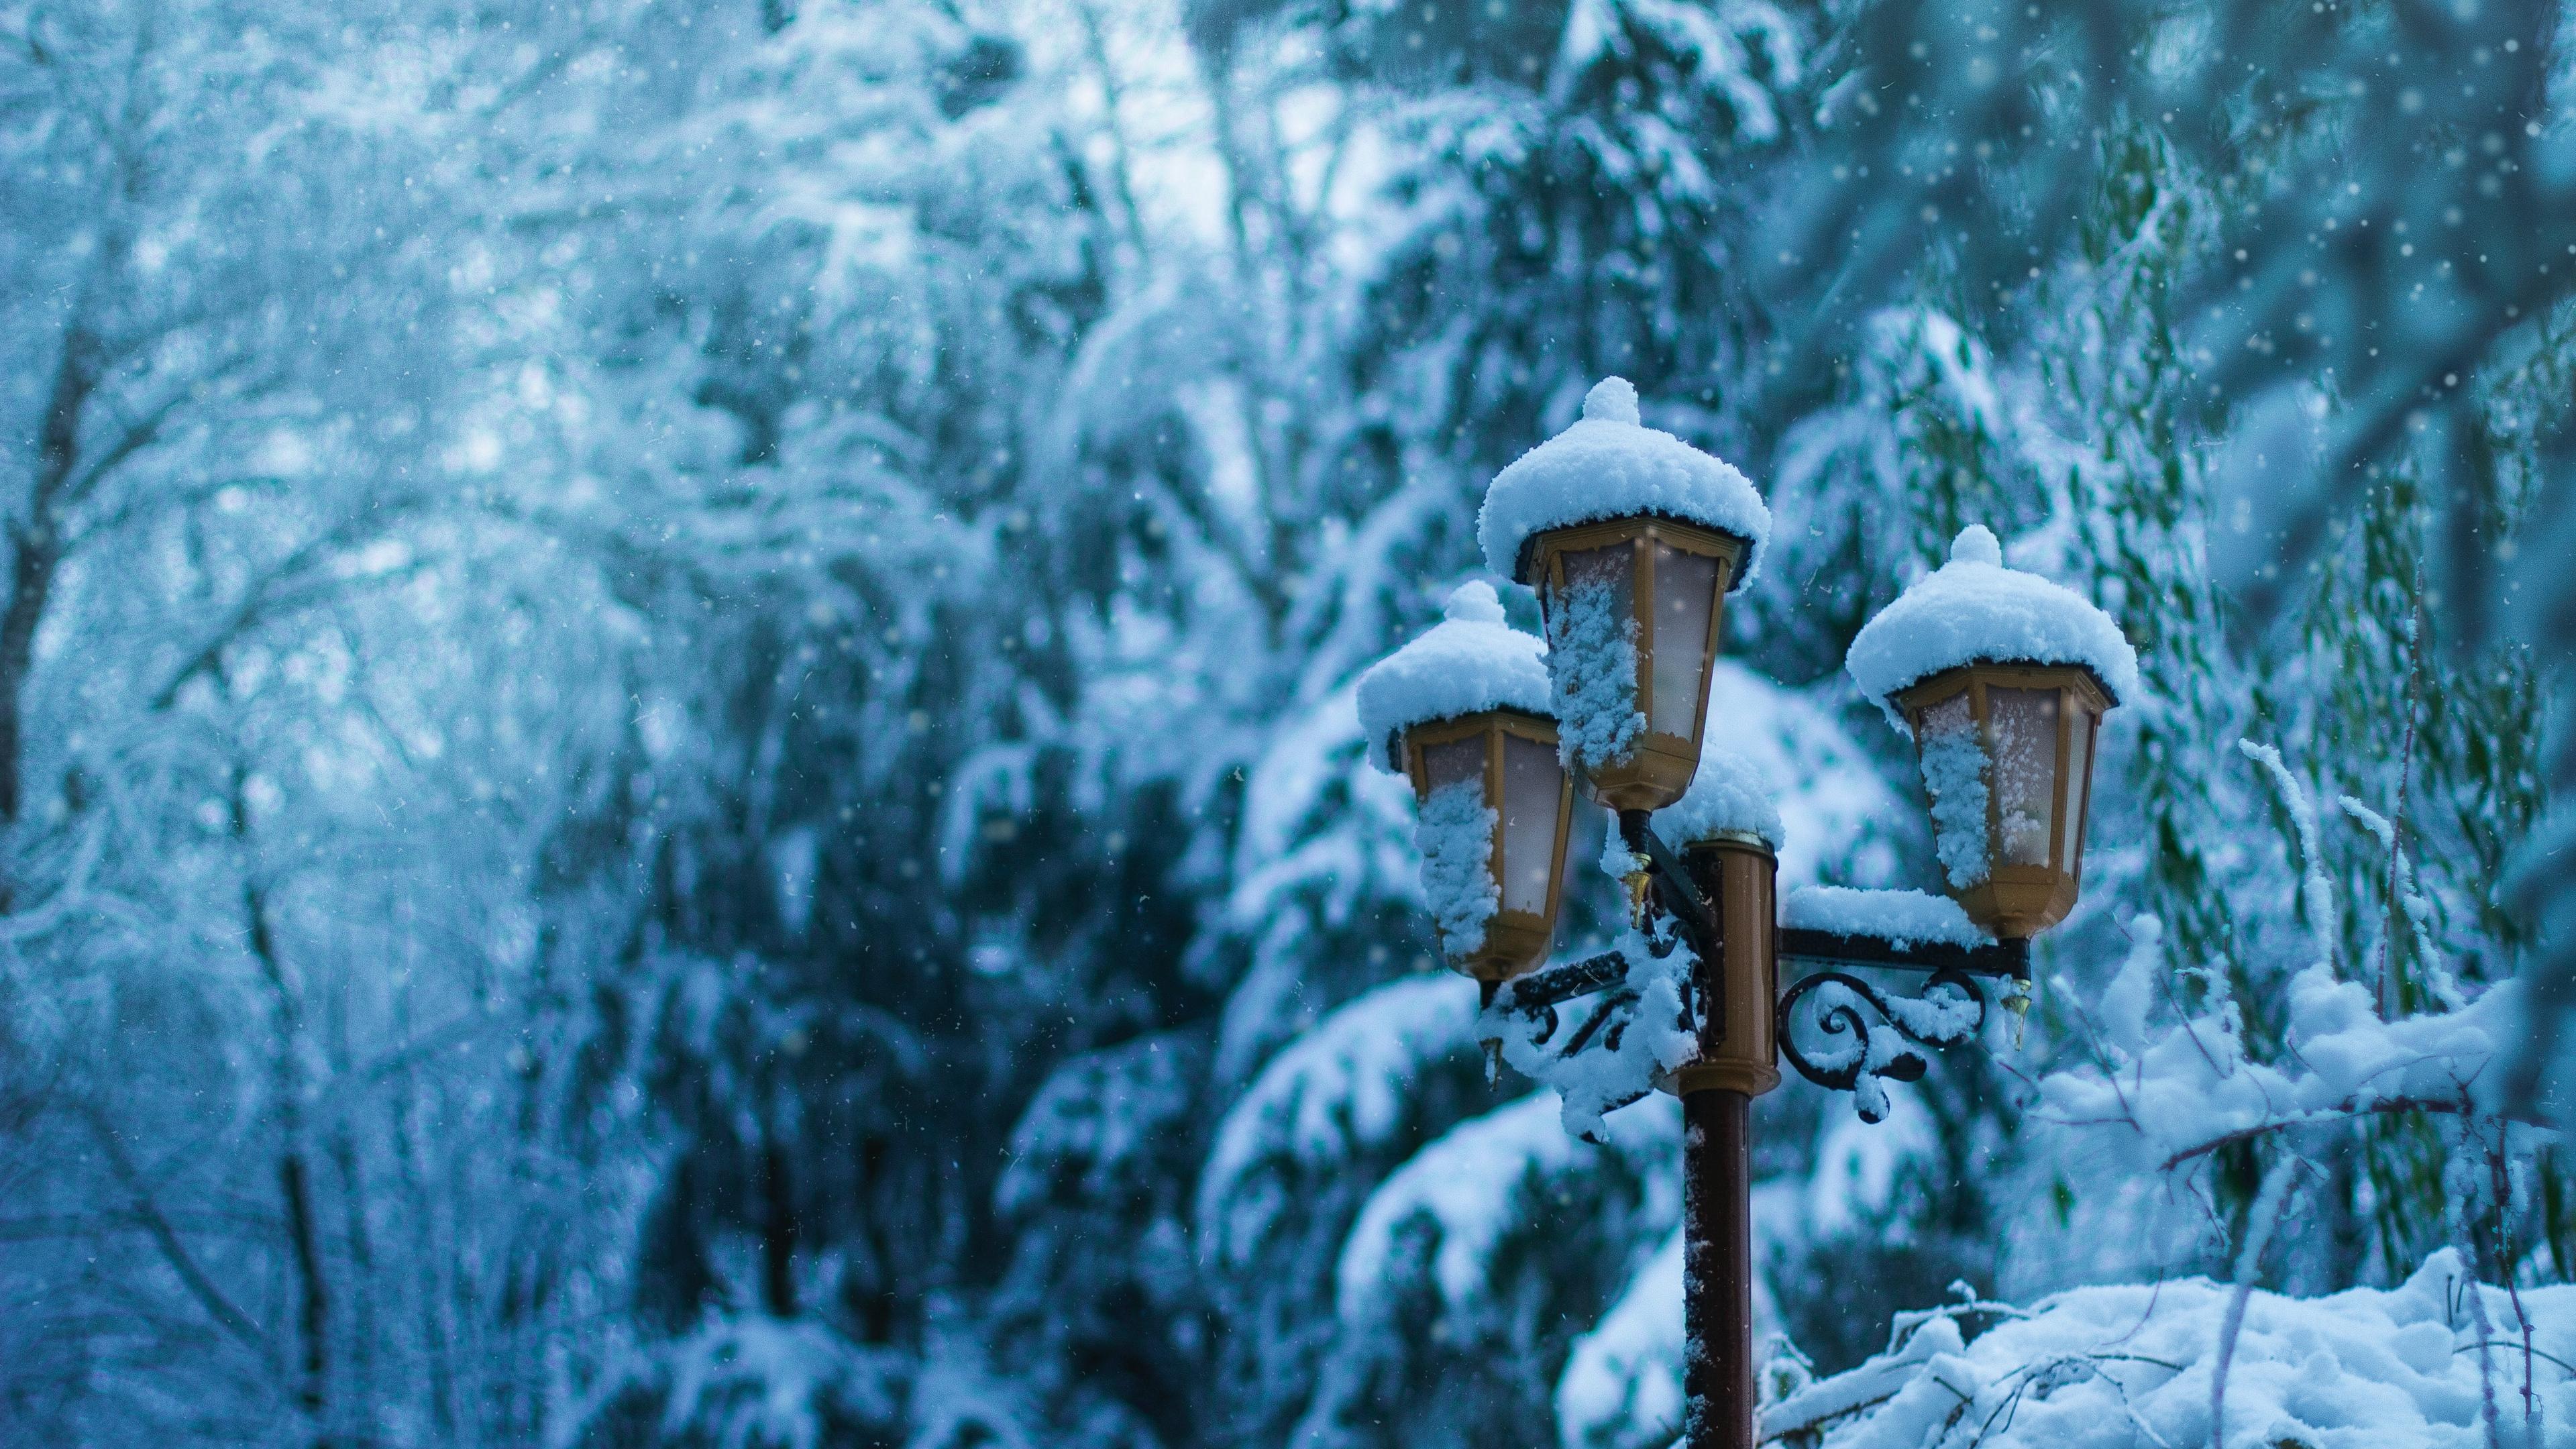 Download wallpaper 3840x2160 lantern, pillar, snow, winter